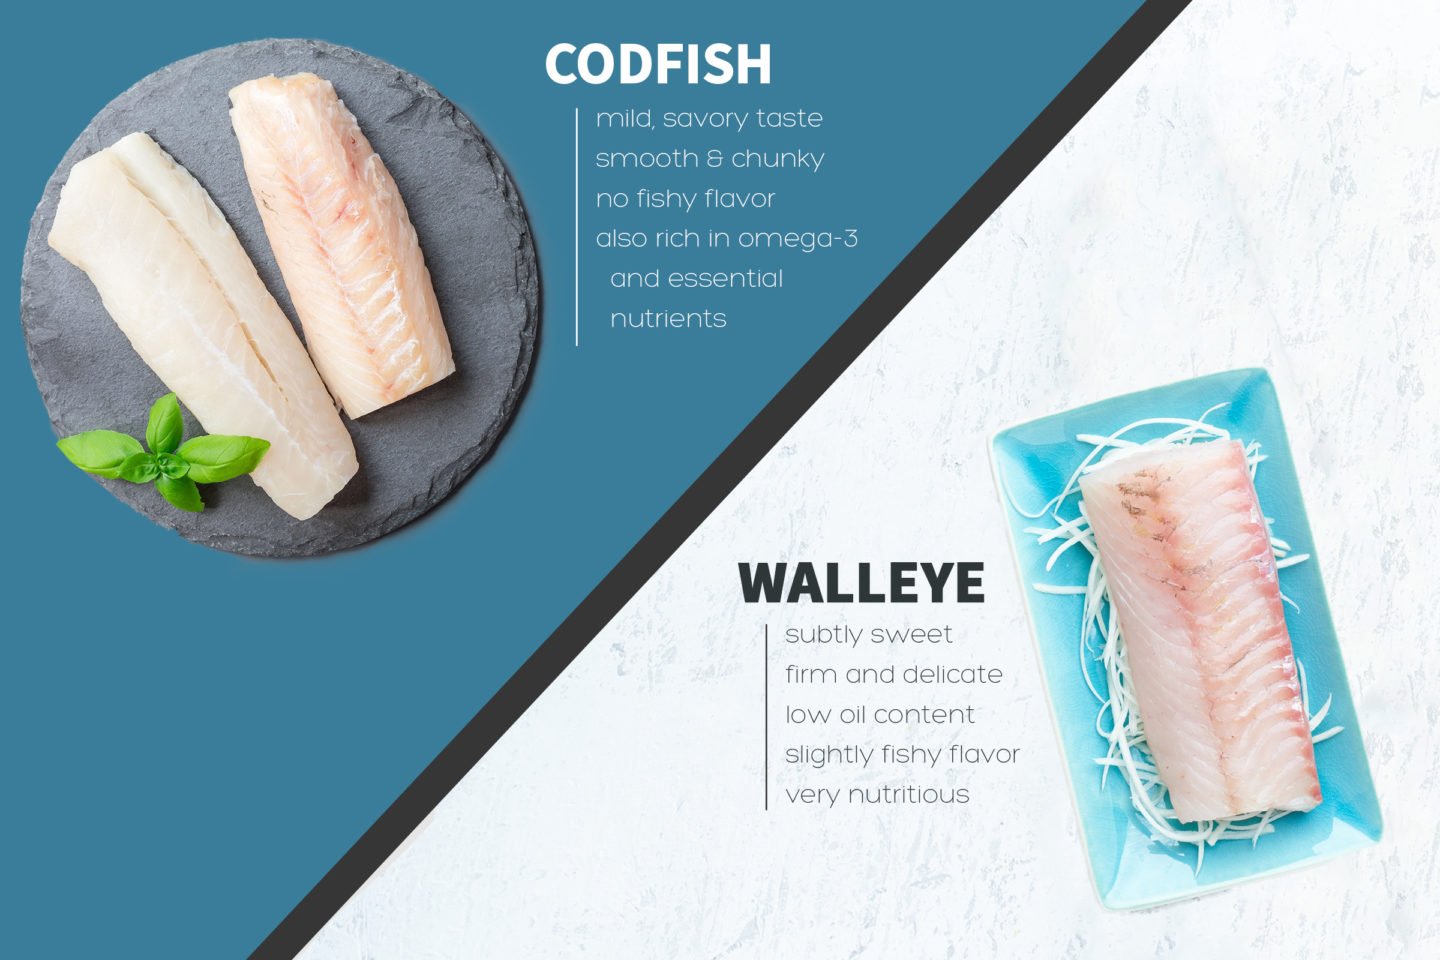 Walleye Vs Codfish